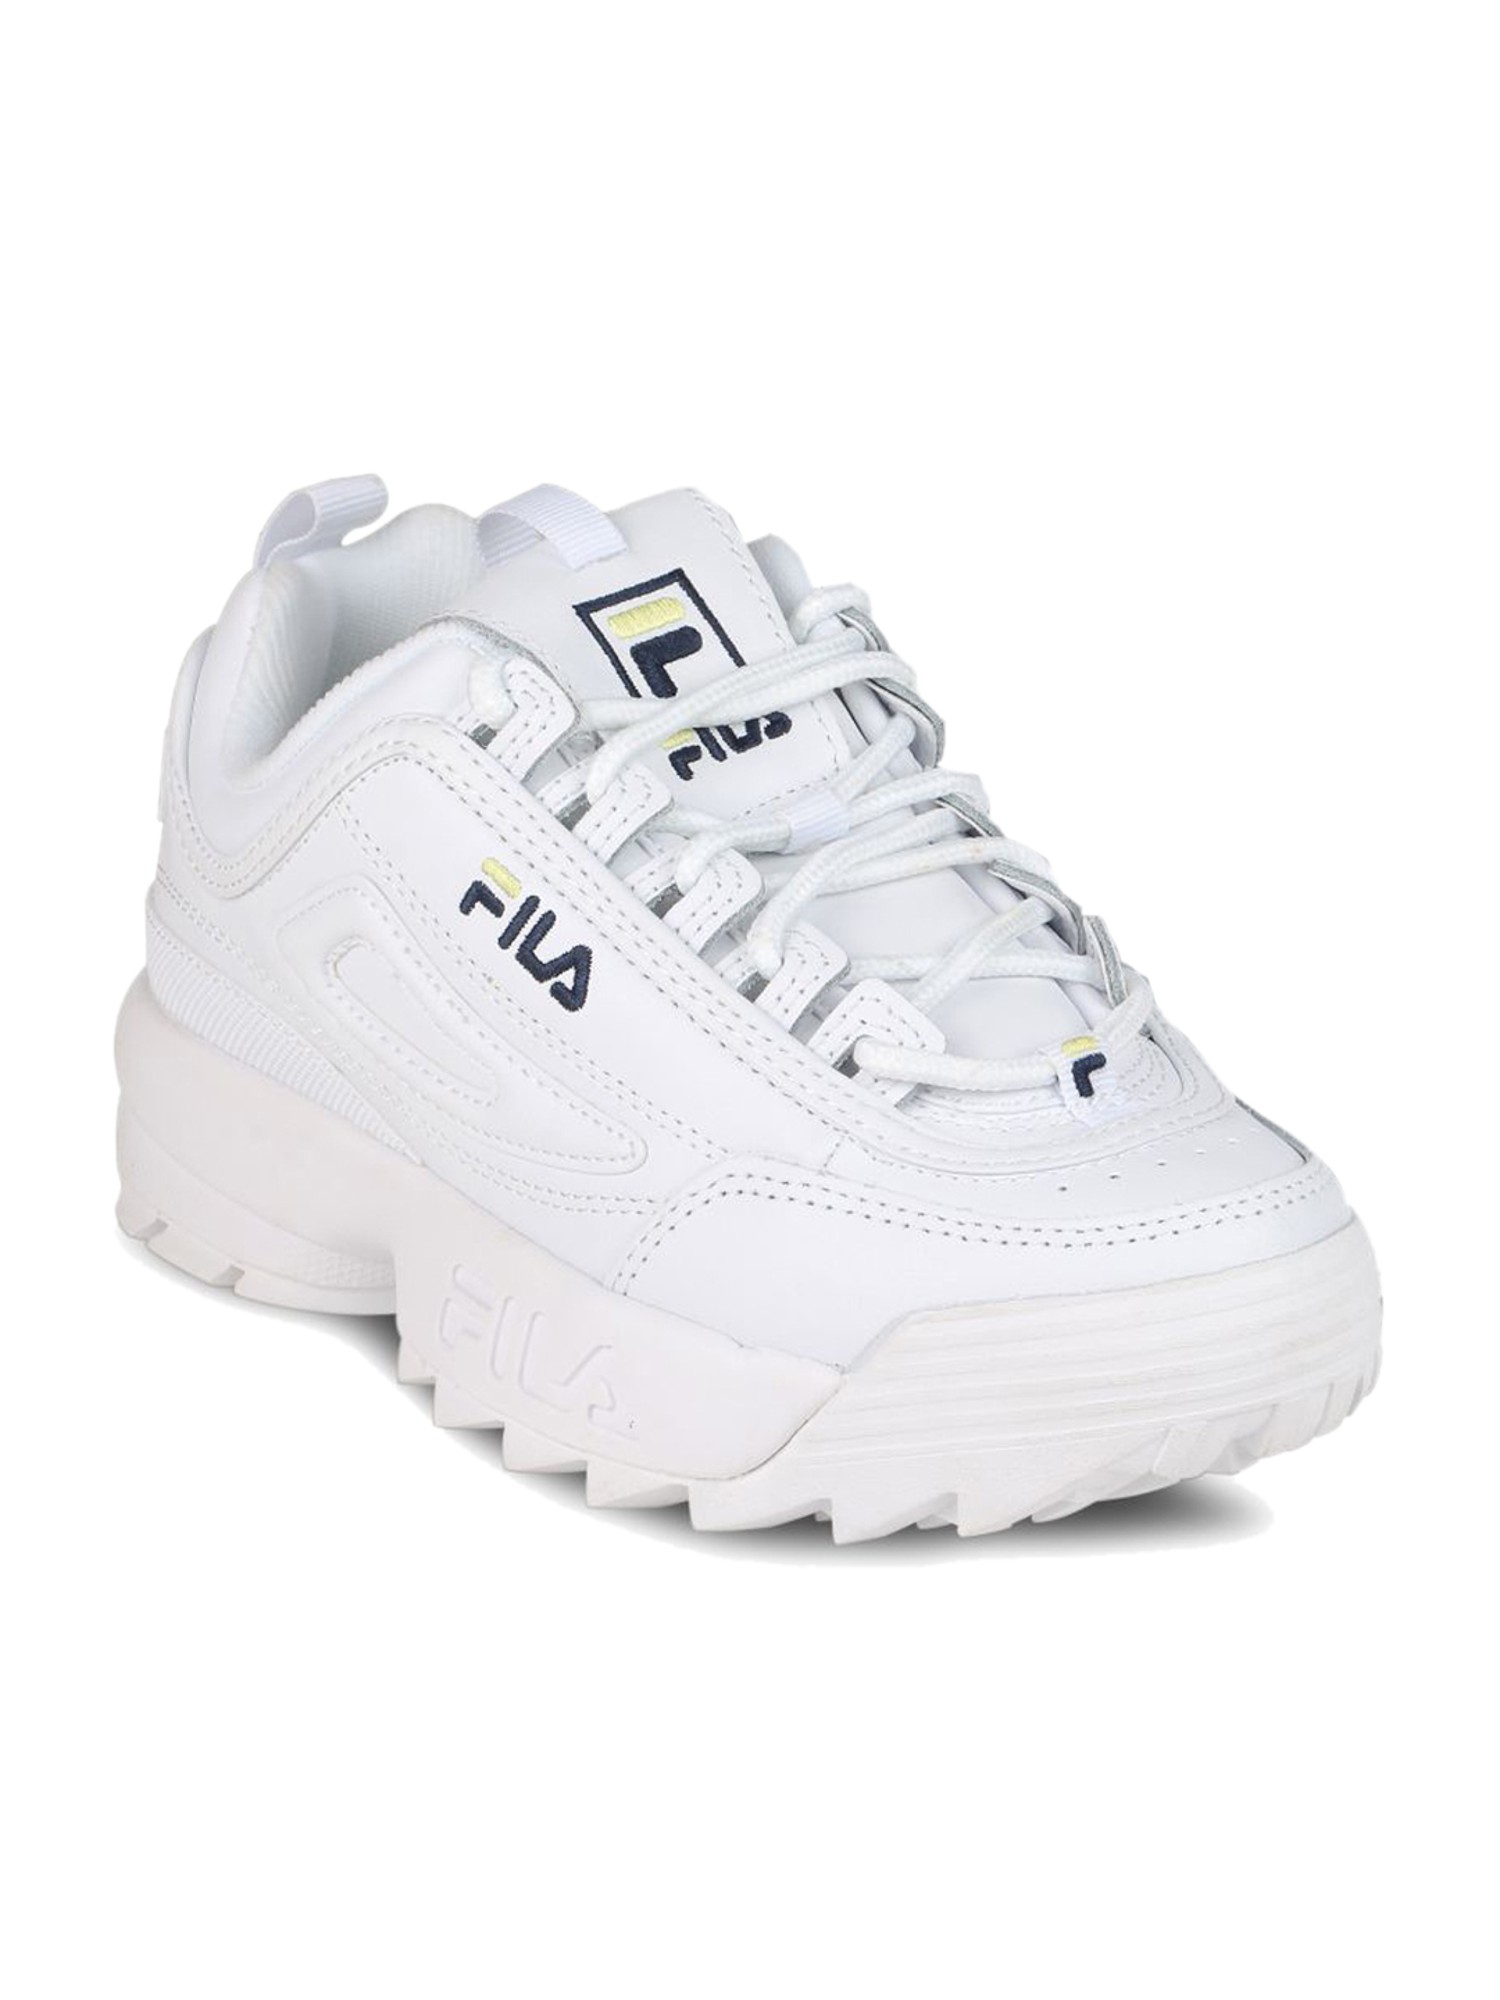 Fila Mens Original Fitness Sneakers 11F16Lt-150 Navy/Wht | Premium Lounge NY